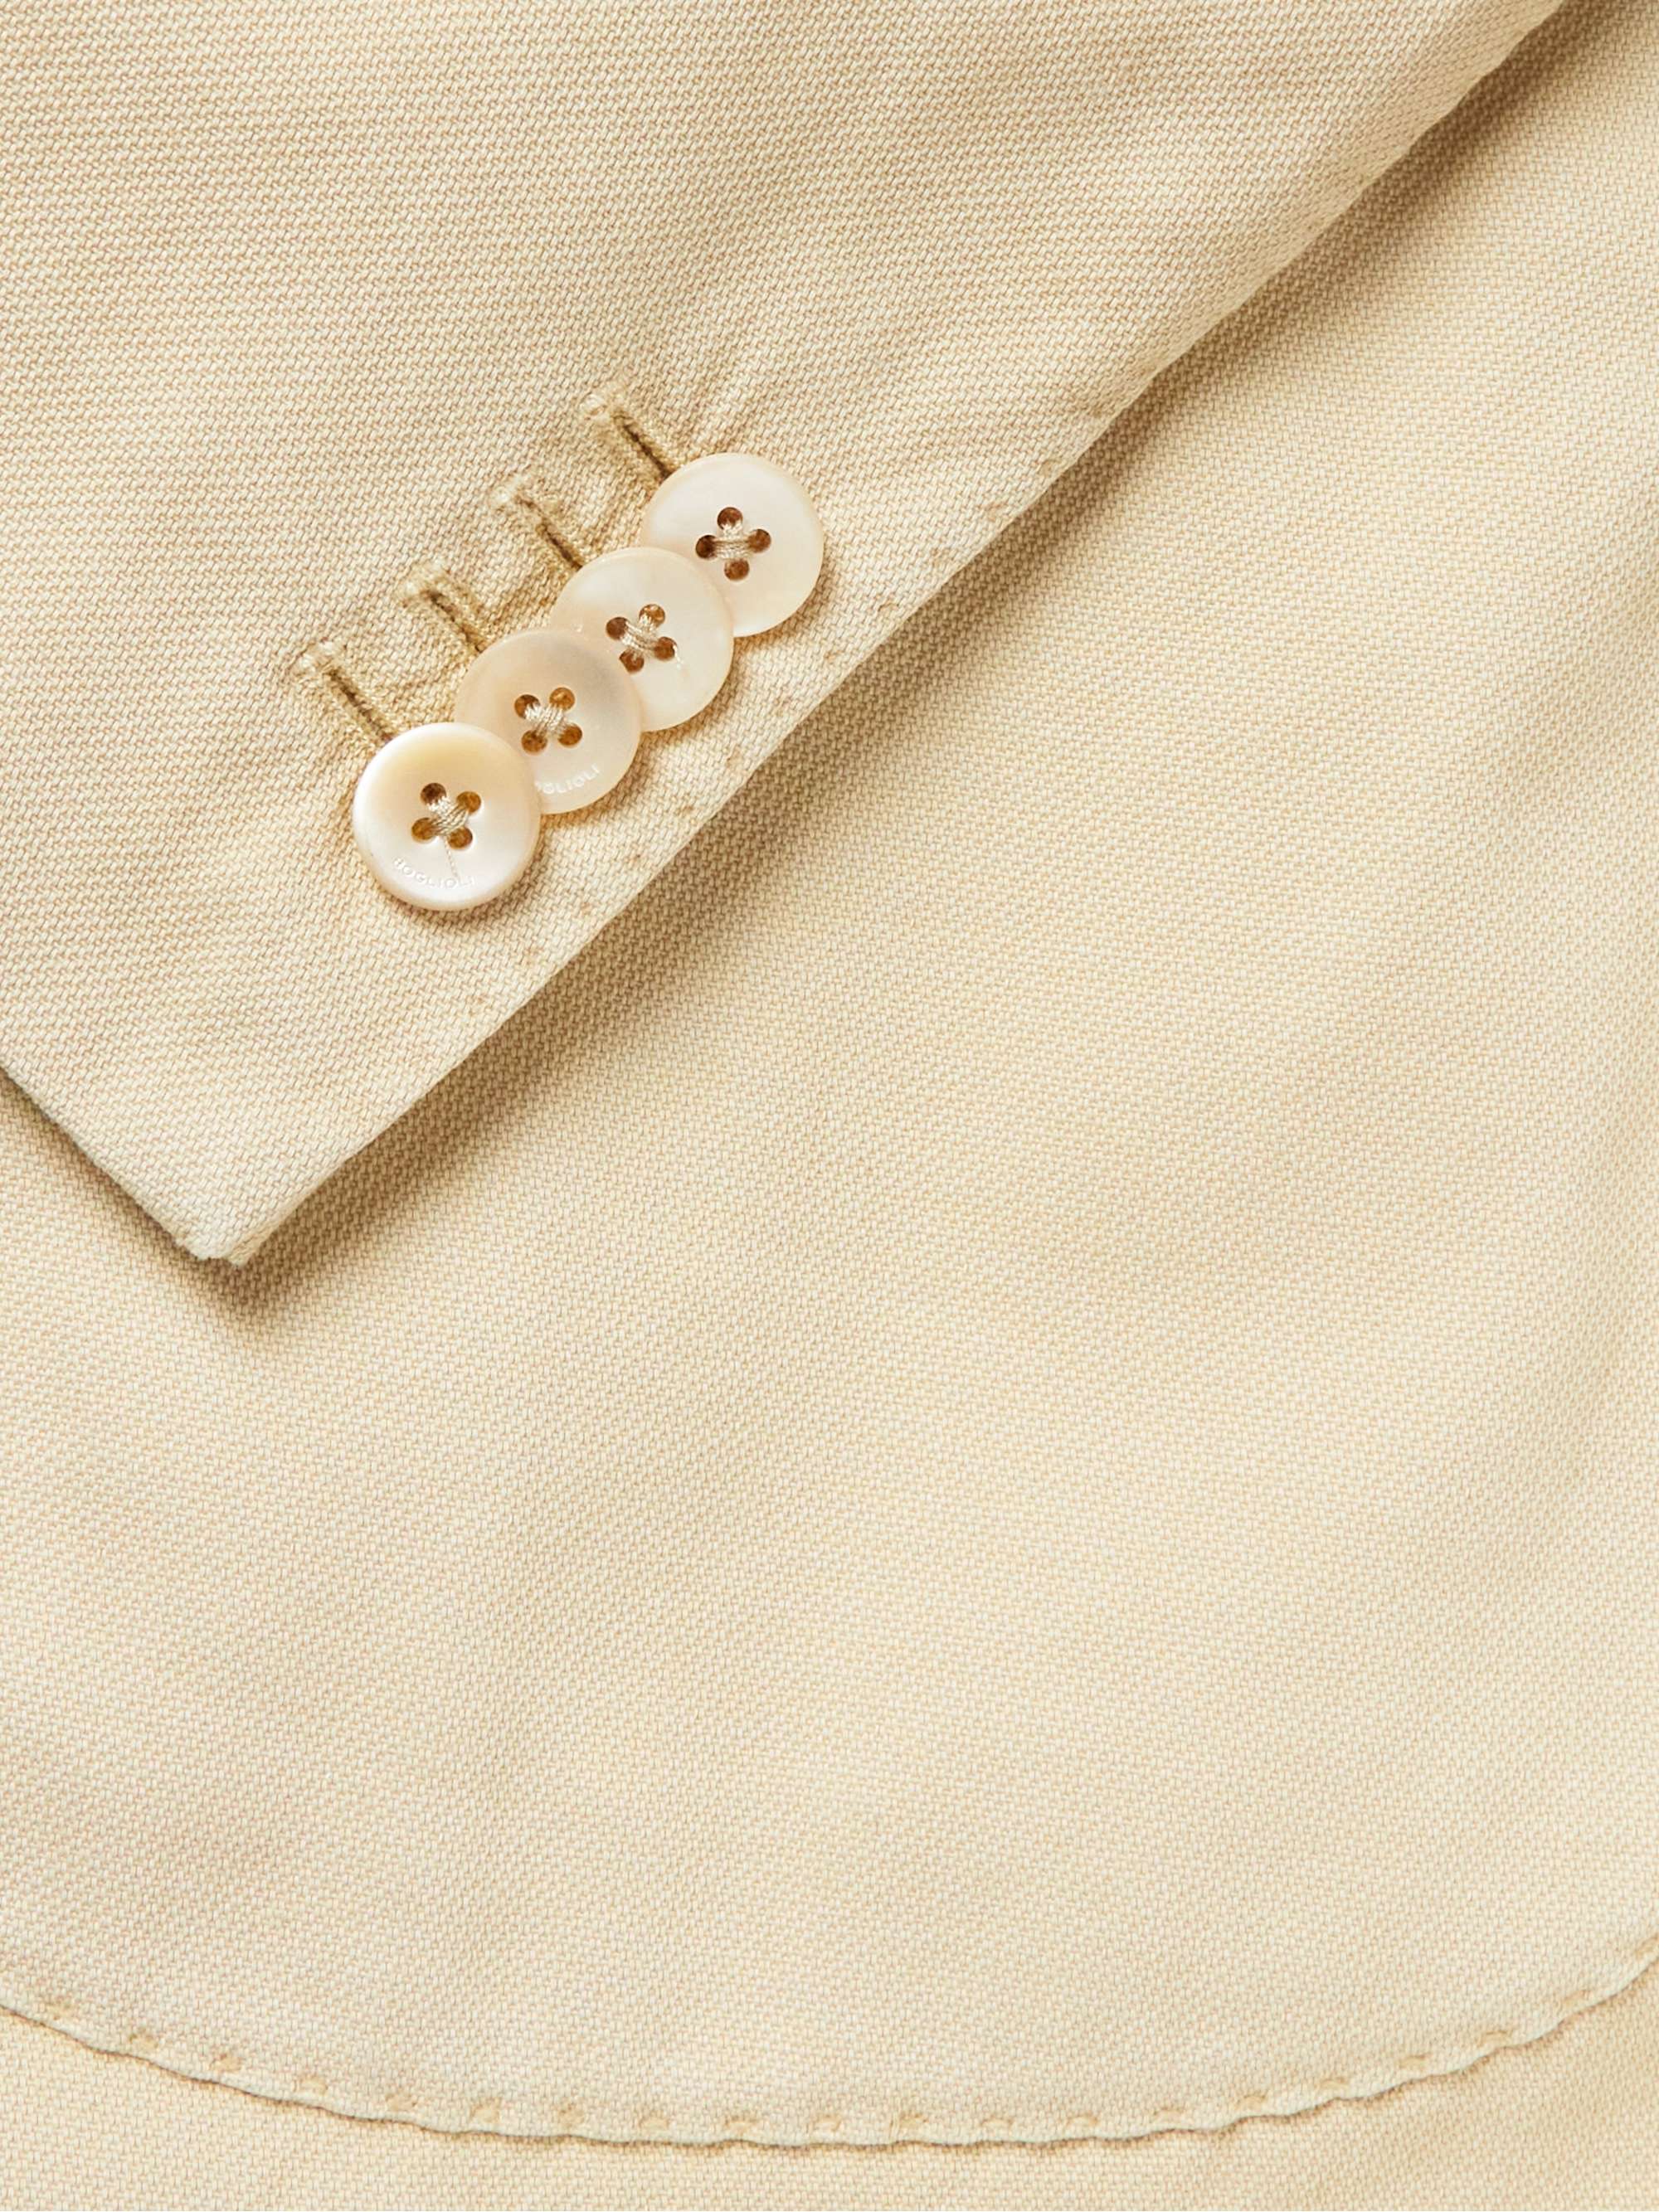 BOGLIOLI Textured Cotton-Blend Suit Jacket